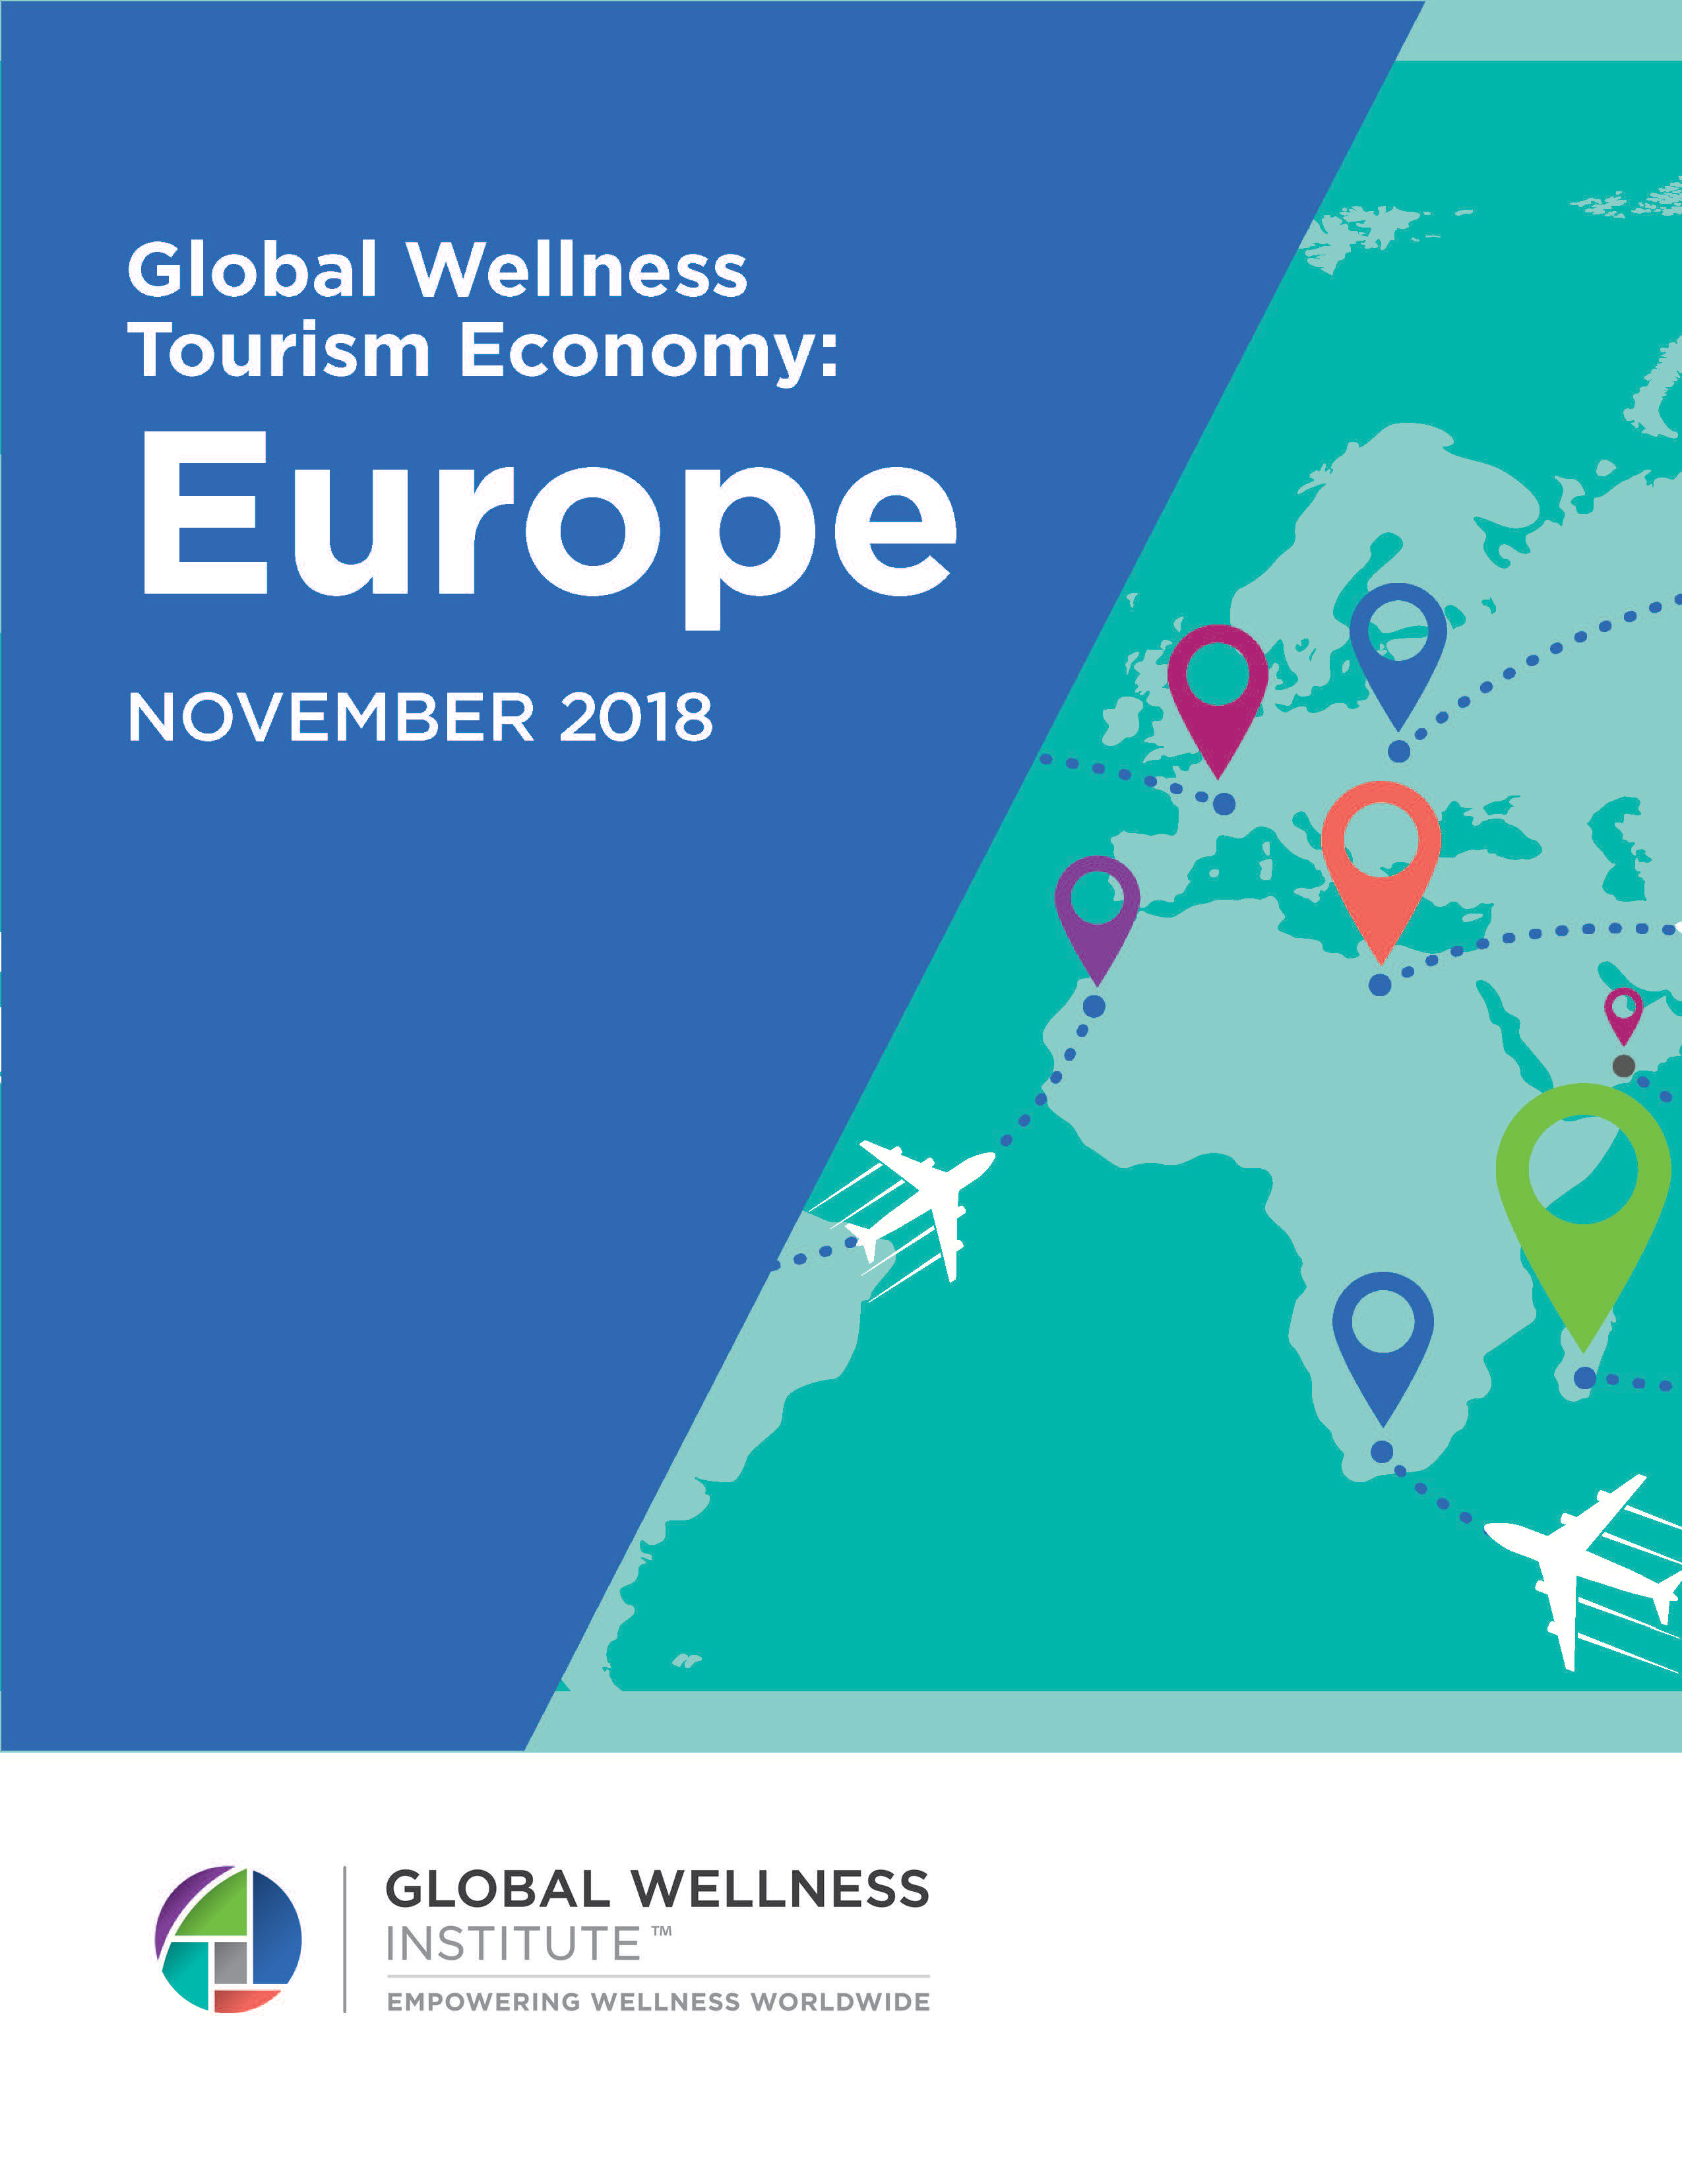 Tourism economy